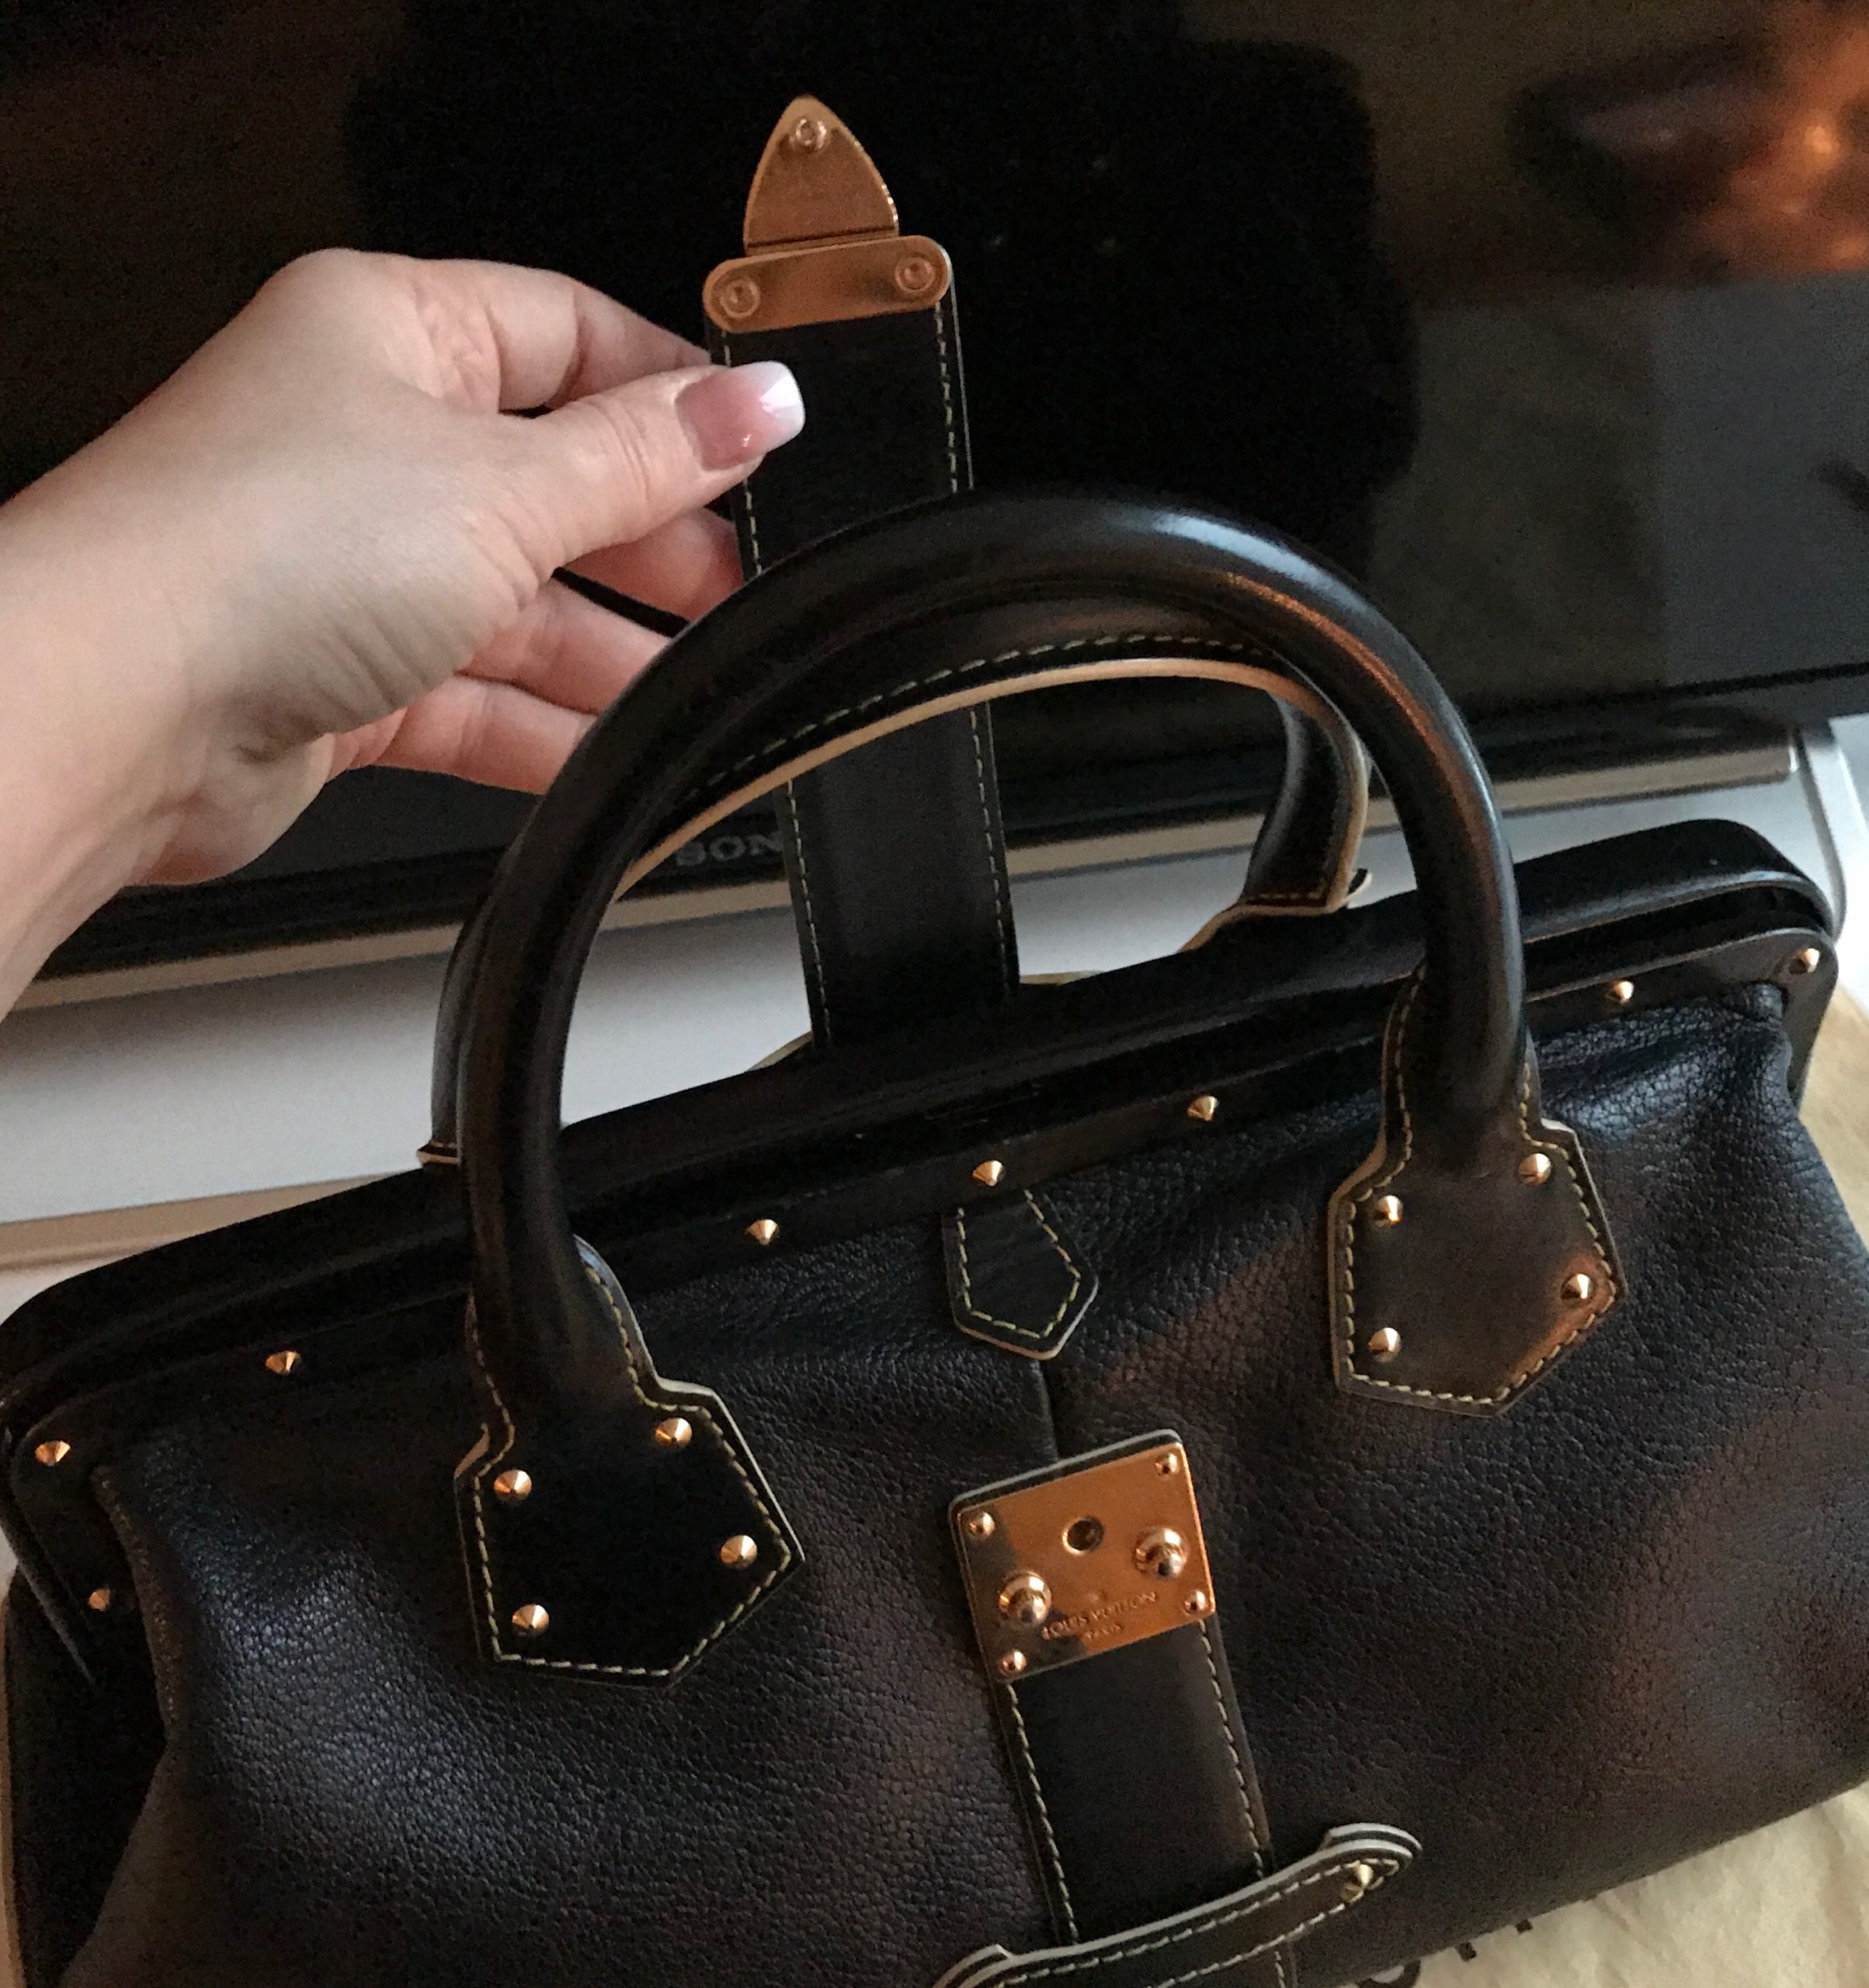 Louis Vuitton L Handbag